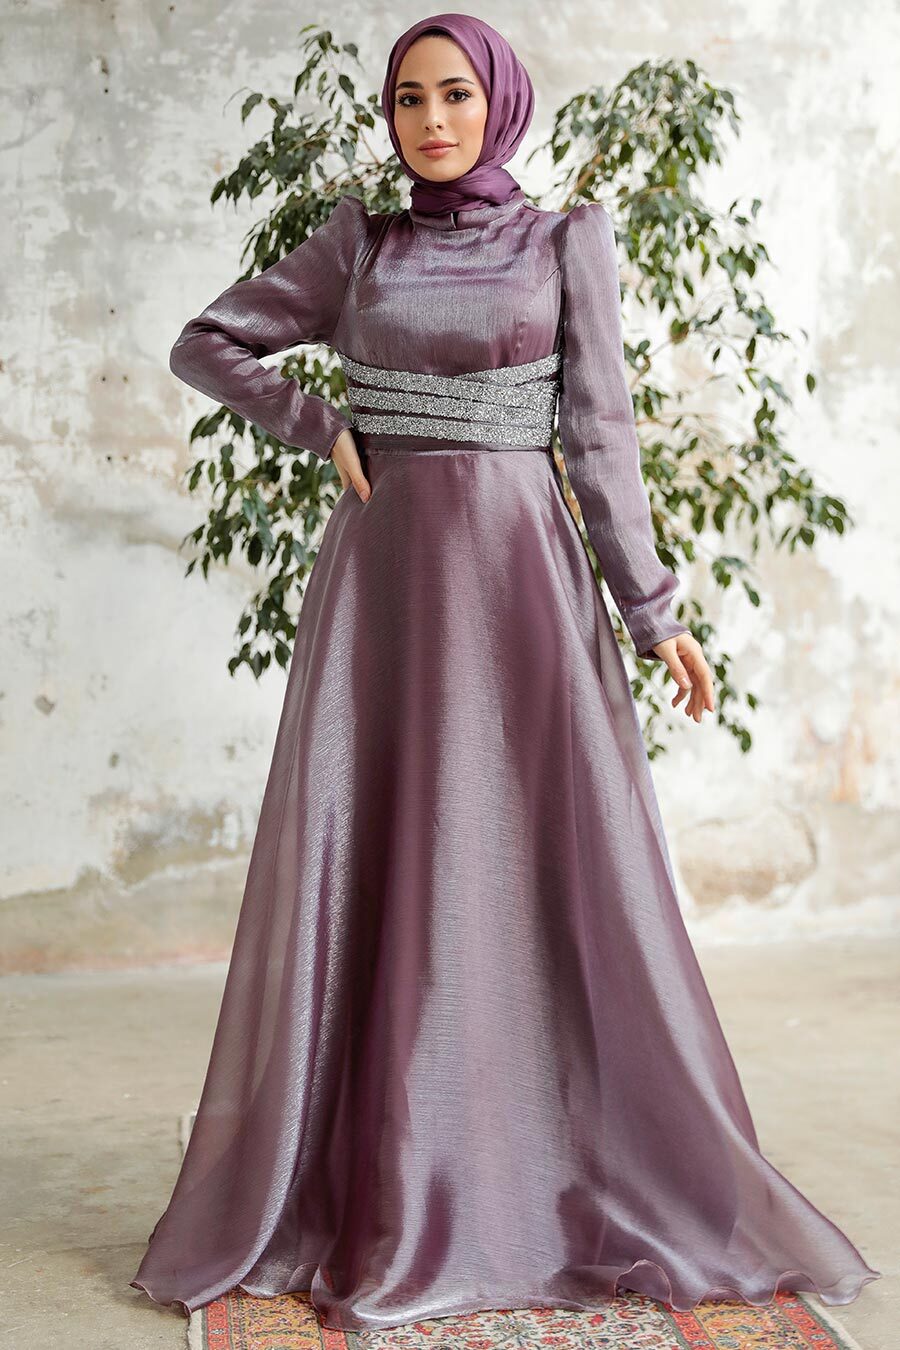 Neva Style - Elegant Dark Lila Muslim Fashion Wedding Dress 3812KLILA